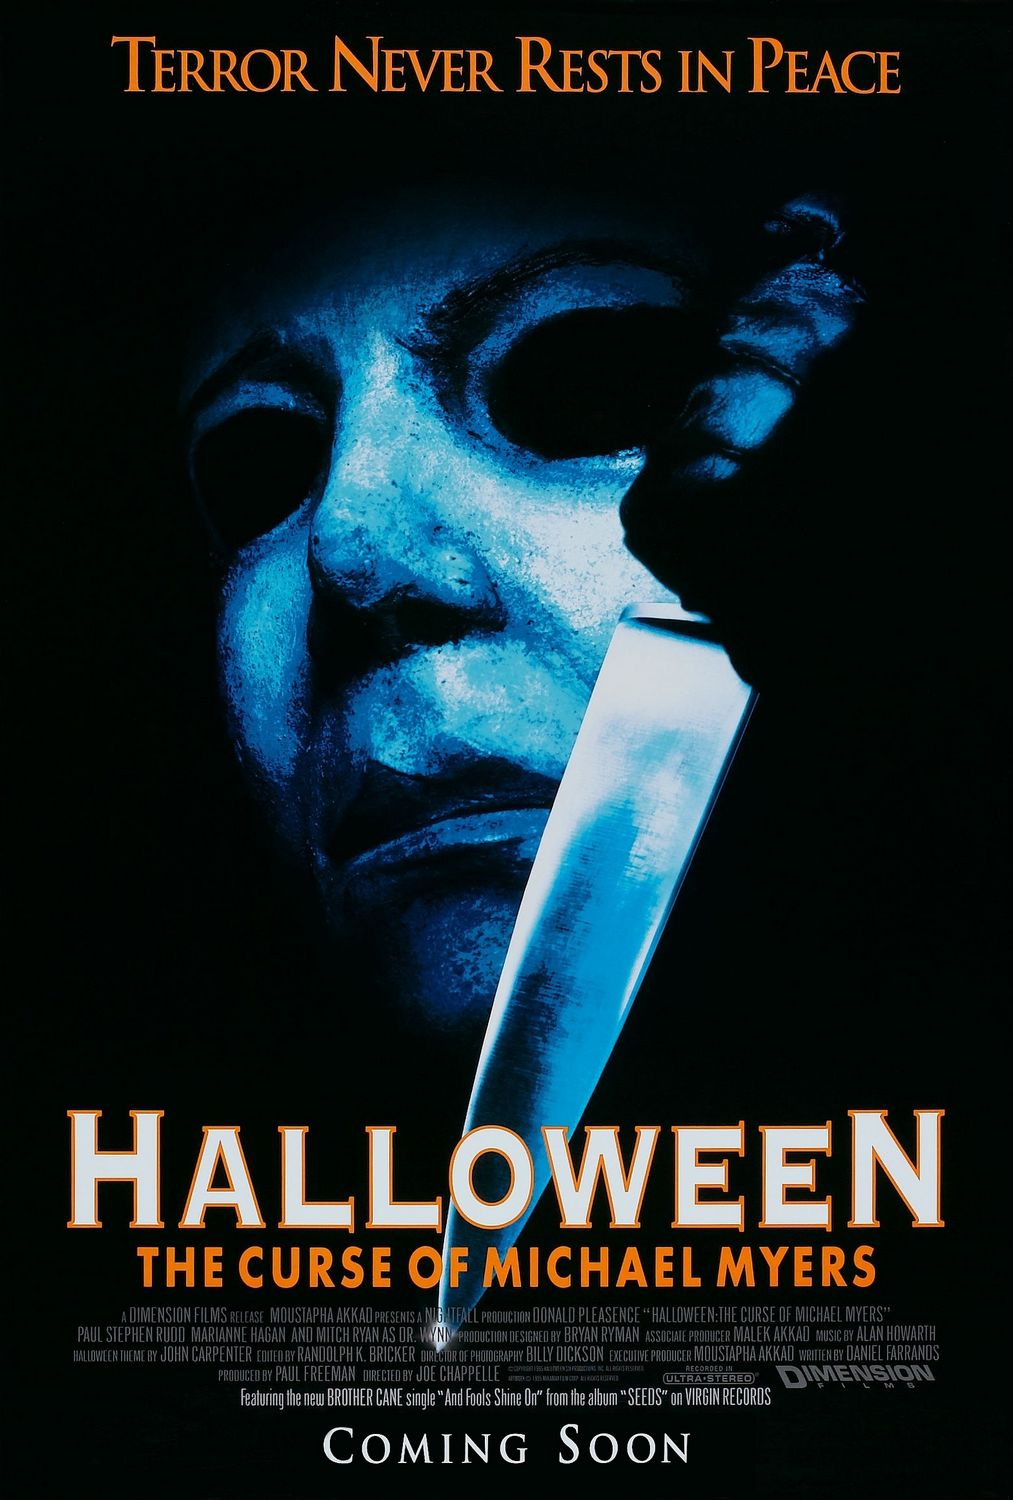 Постер - Хэллоуин 6: Проклятие Майкла Майерса: 1013x1500 / 174 Кб